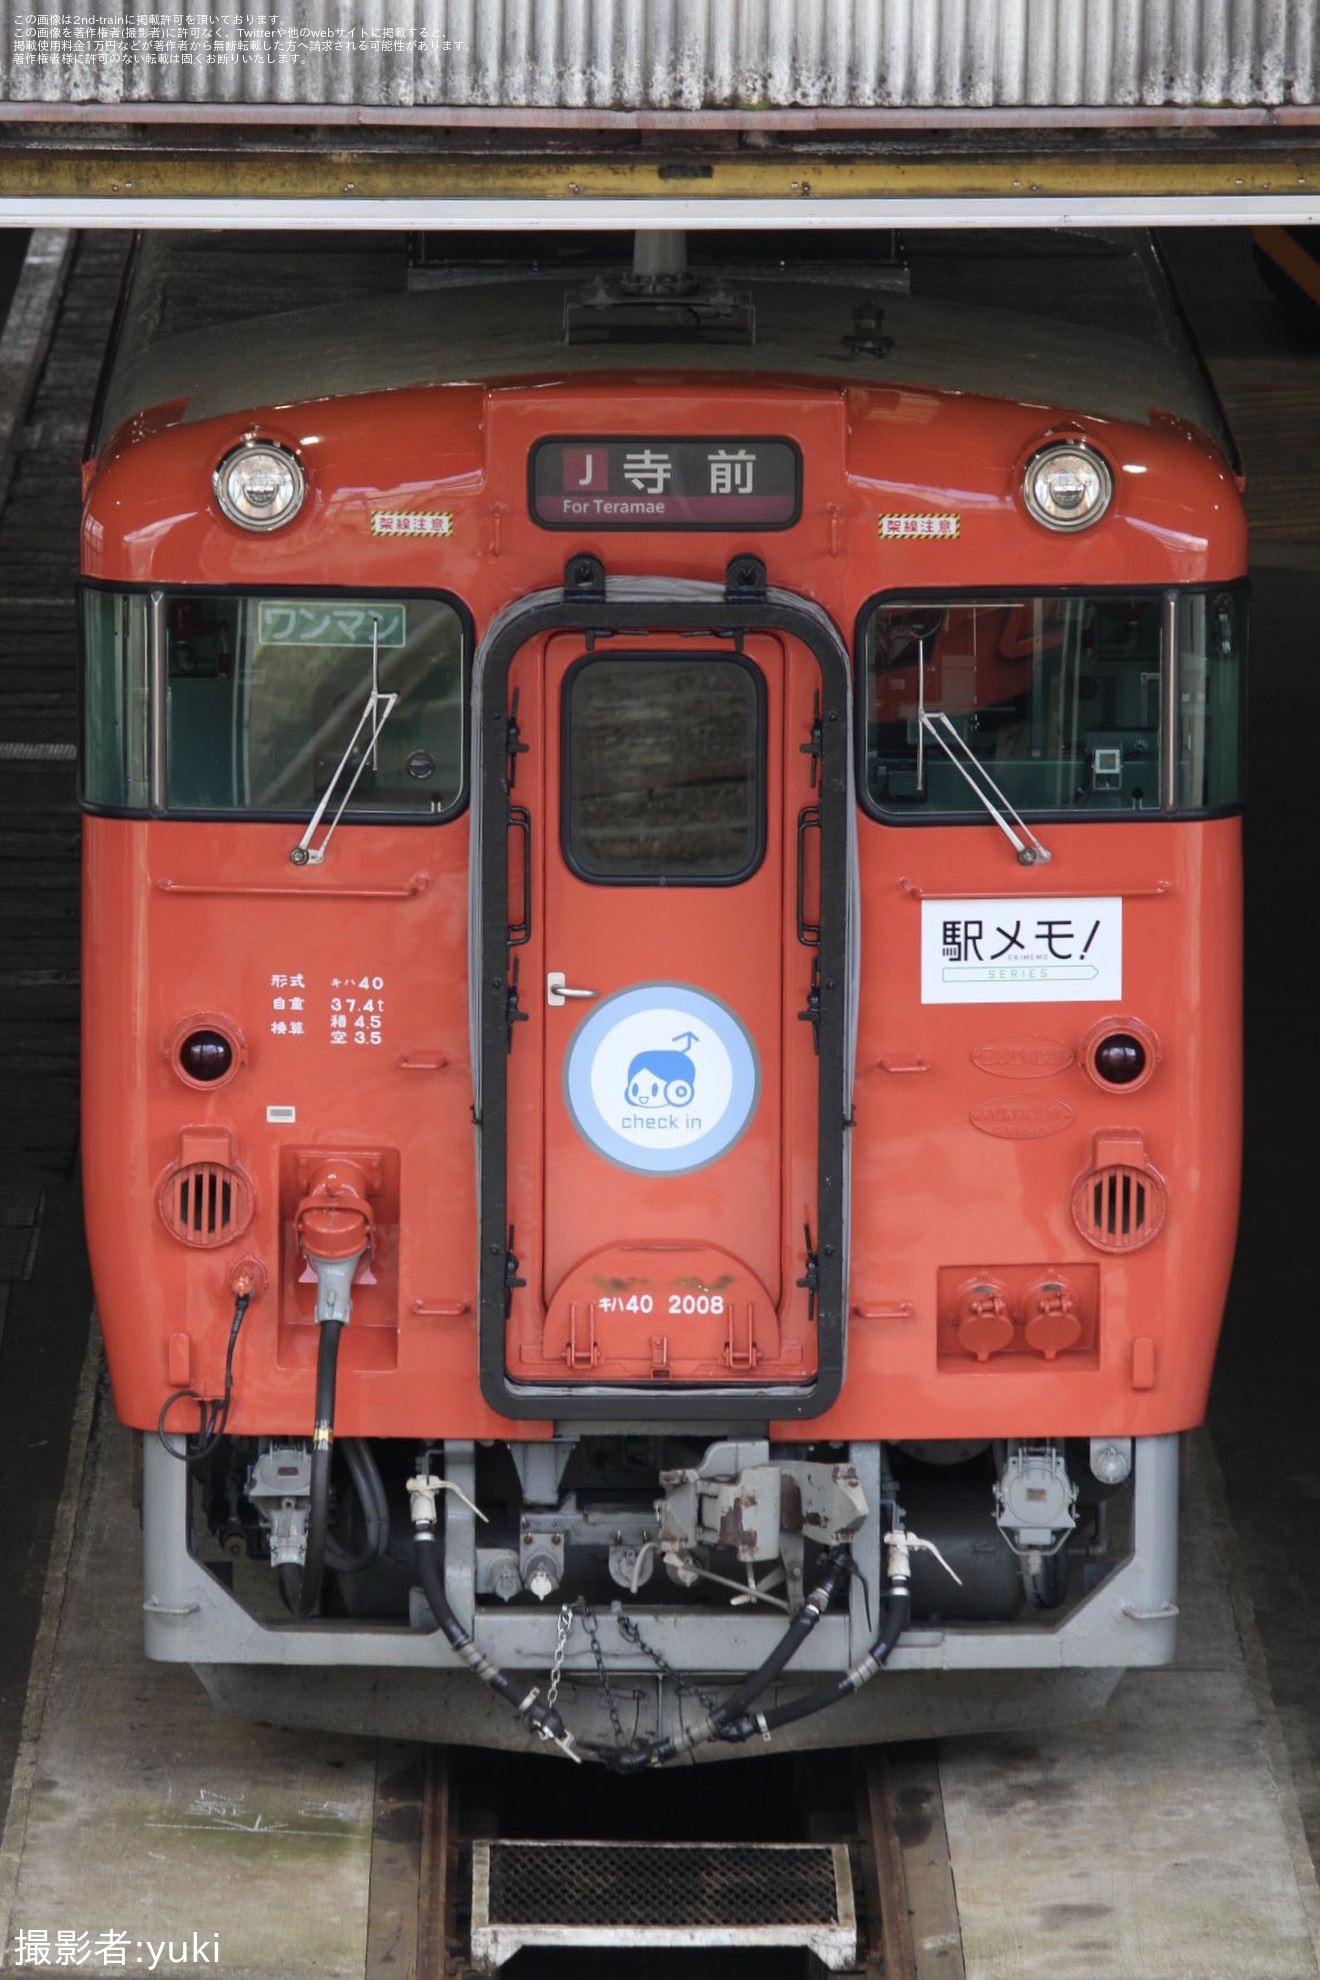 【JR西】キハ40-2008「駅メモ」ラッピングが確認されるの拡大写真